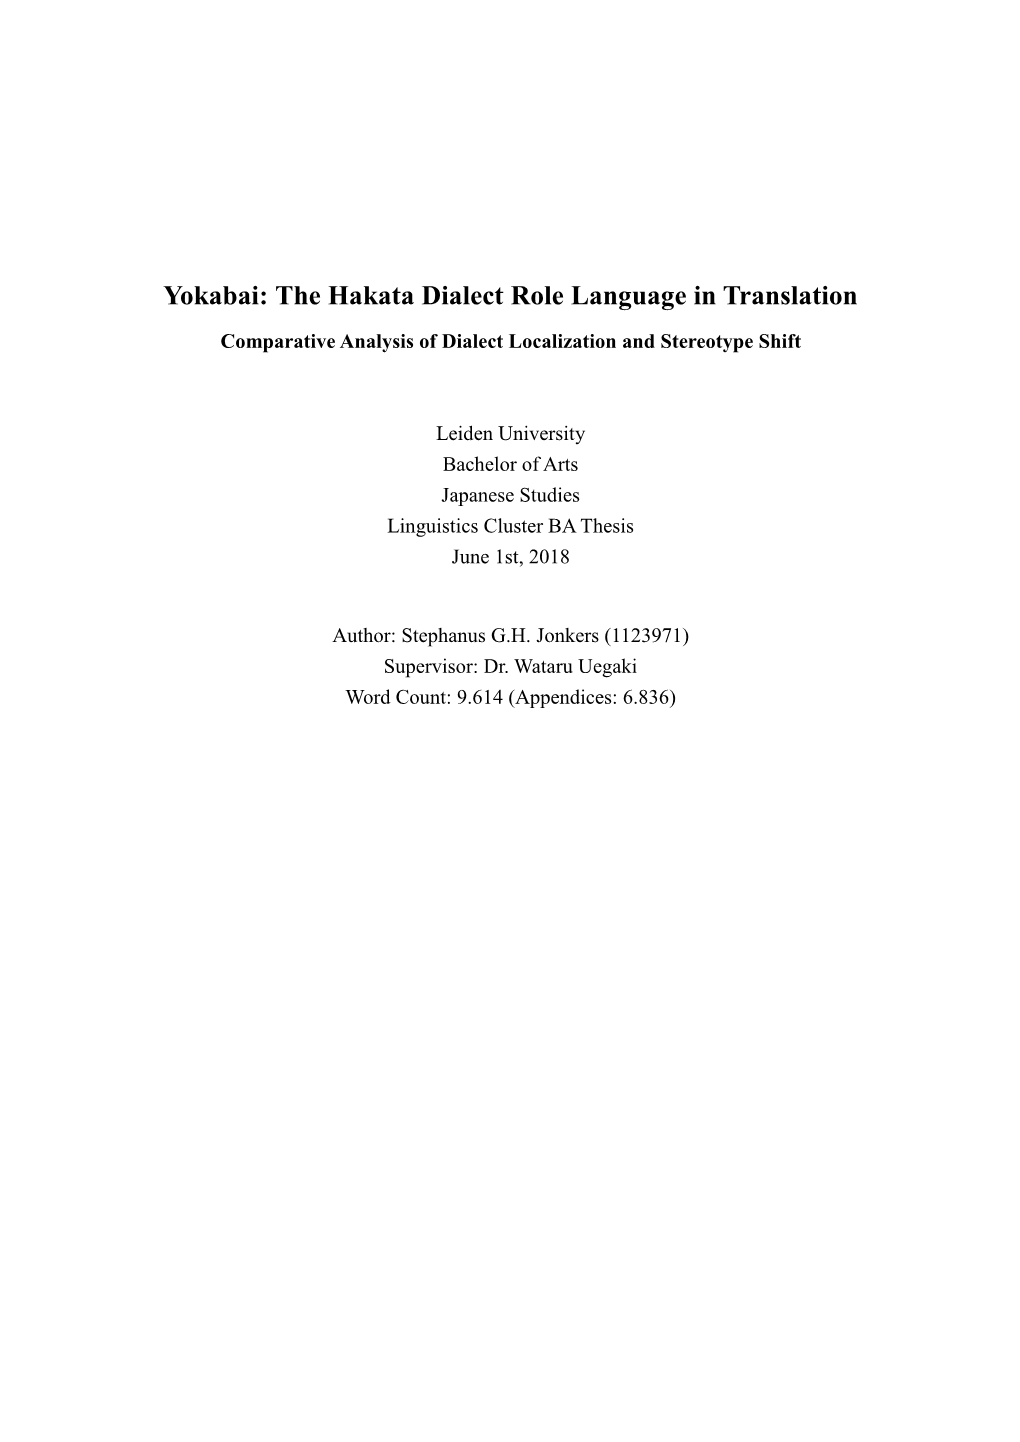 Yokabai: the Hakata Dialect Role Language in Translation